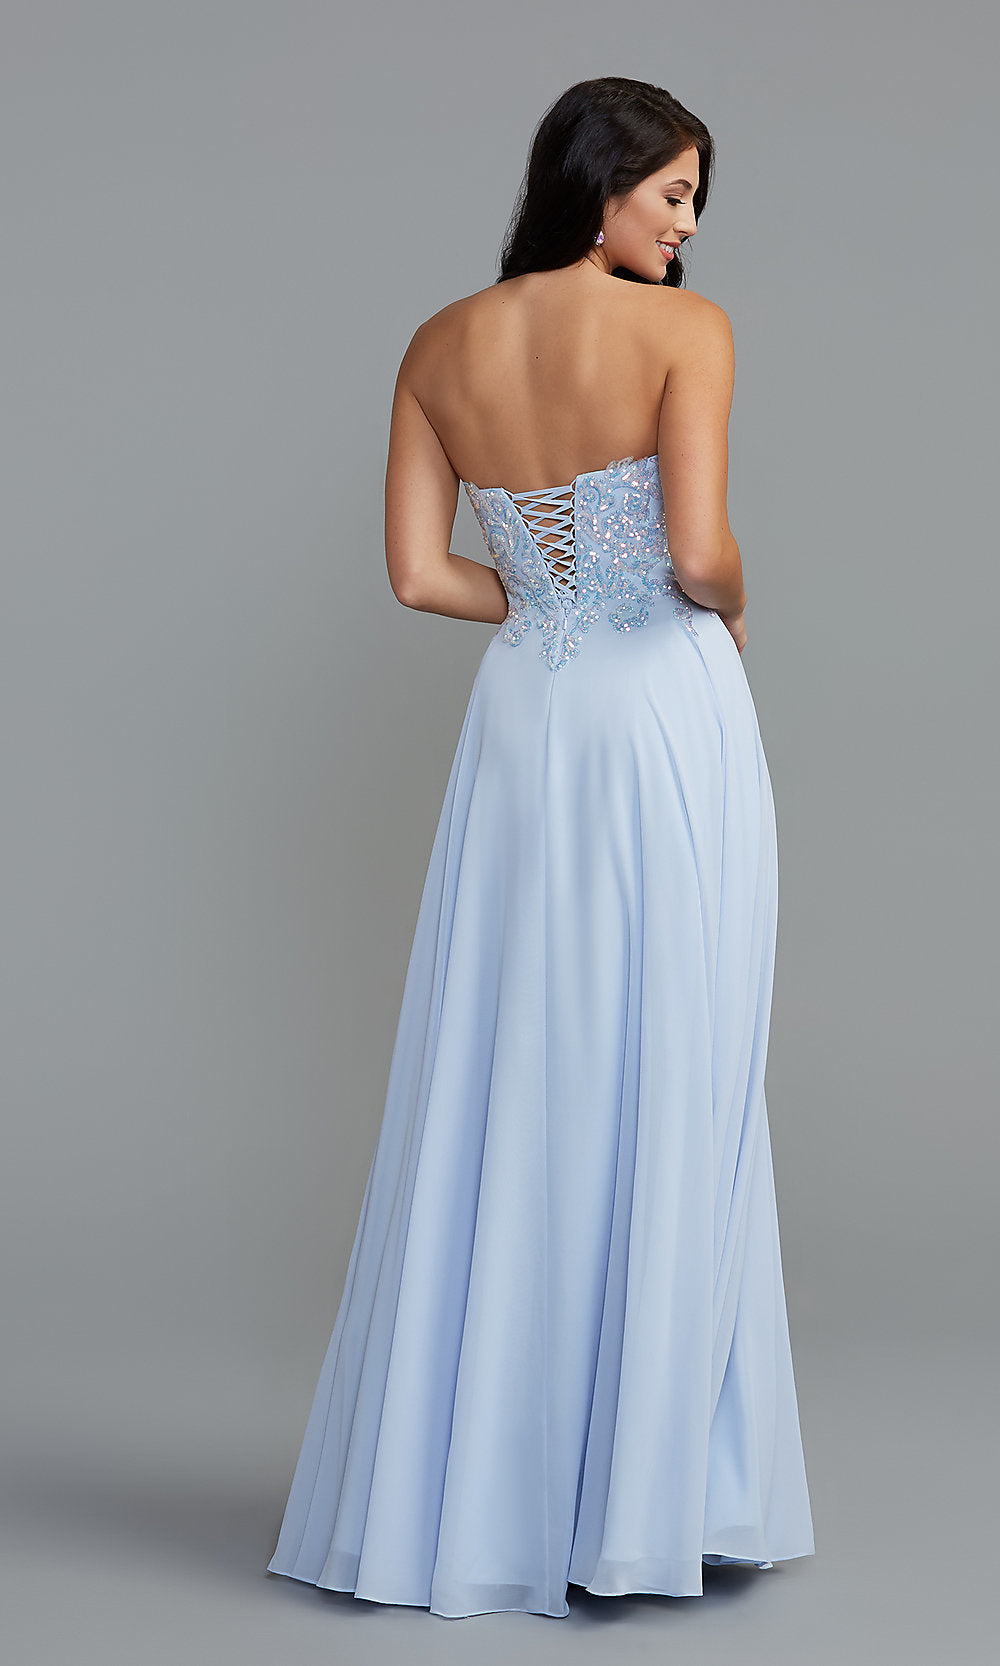  Iridescent-Sequin Long Blue Prom Dress